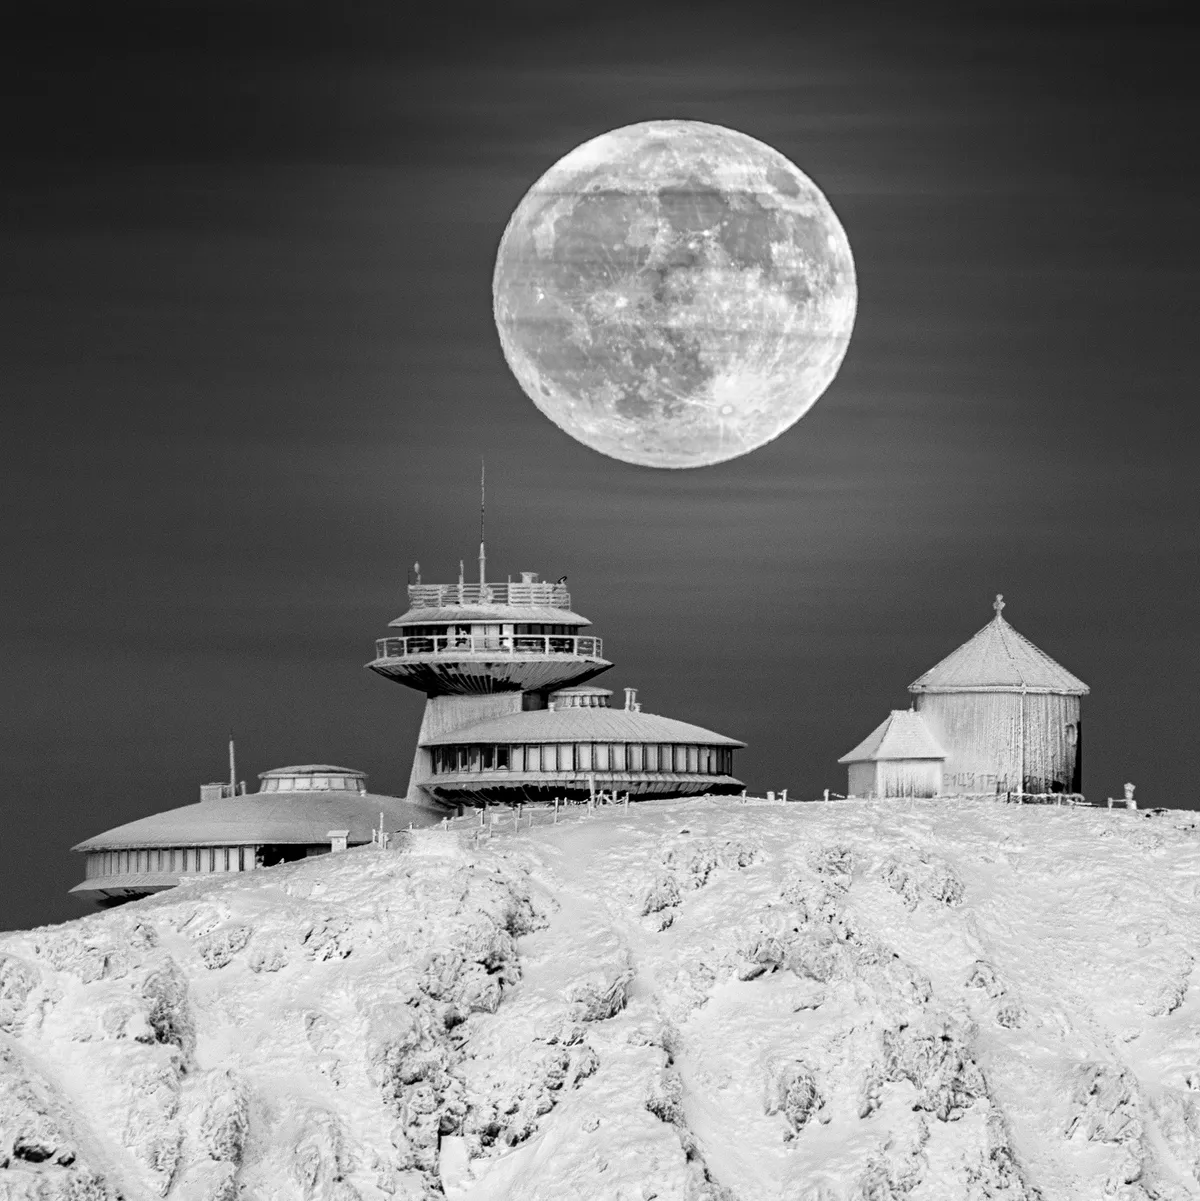 Moon Base Daniel Koszela (Poland) – Highly commended, Our Moon. Credit: Nikon D610 camera, 600mm lens.